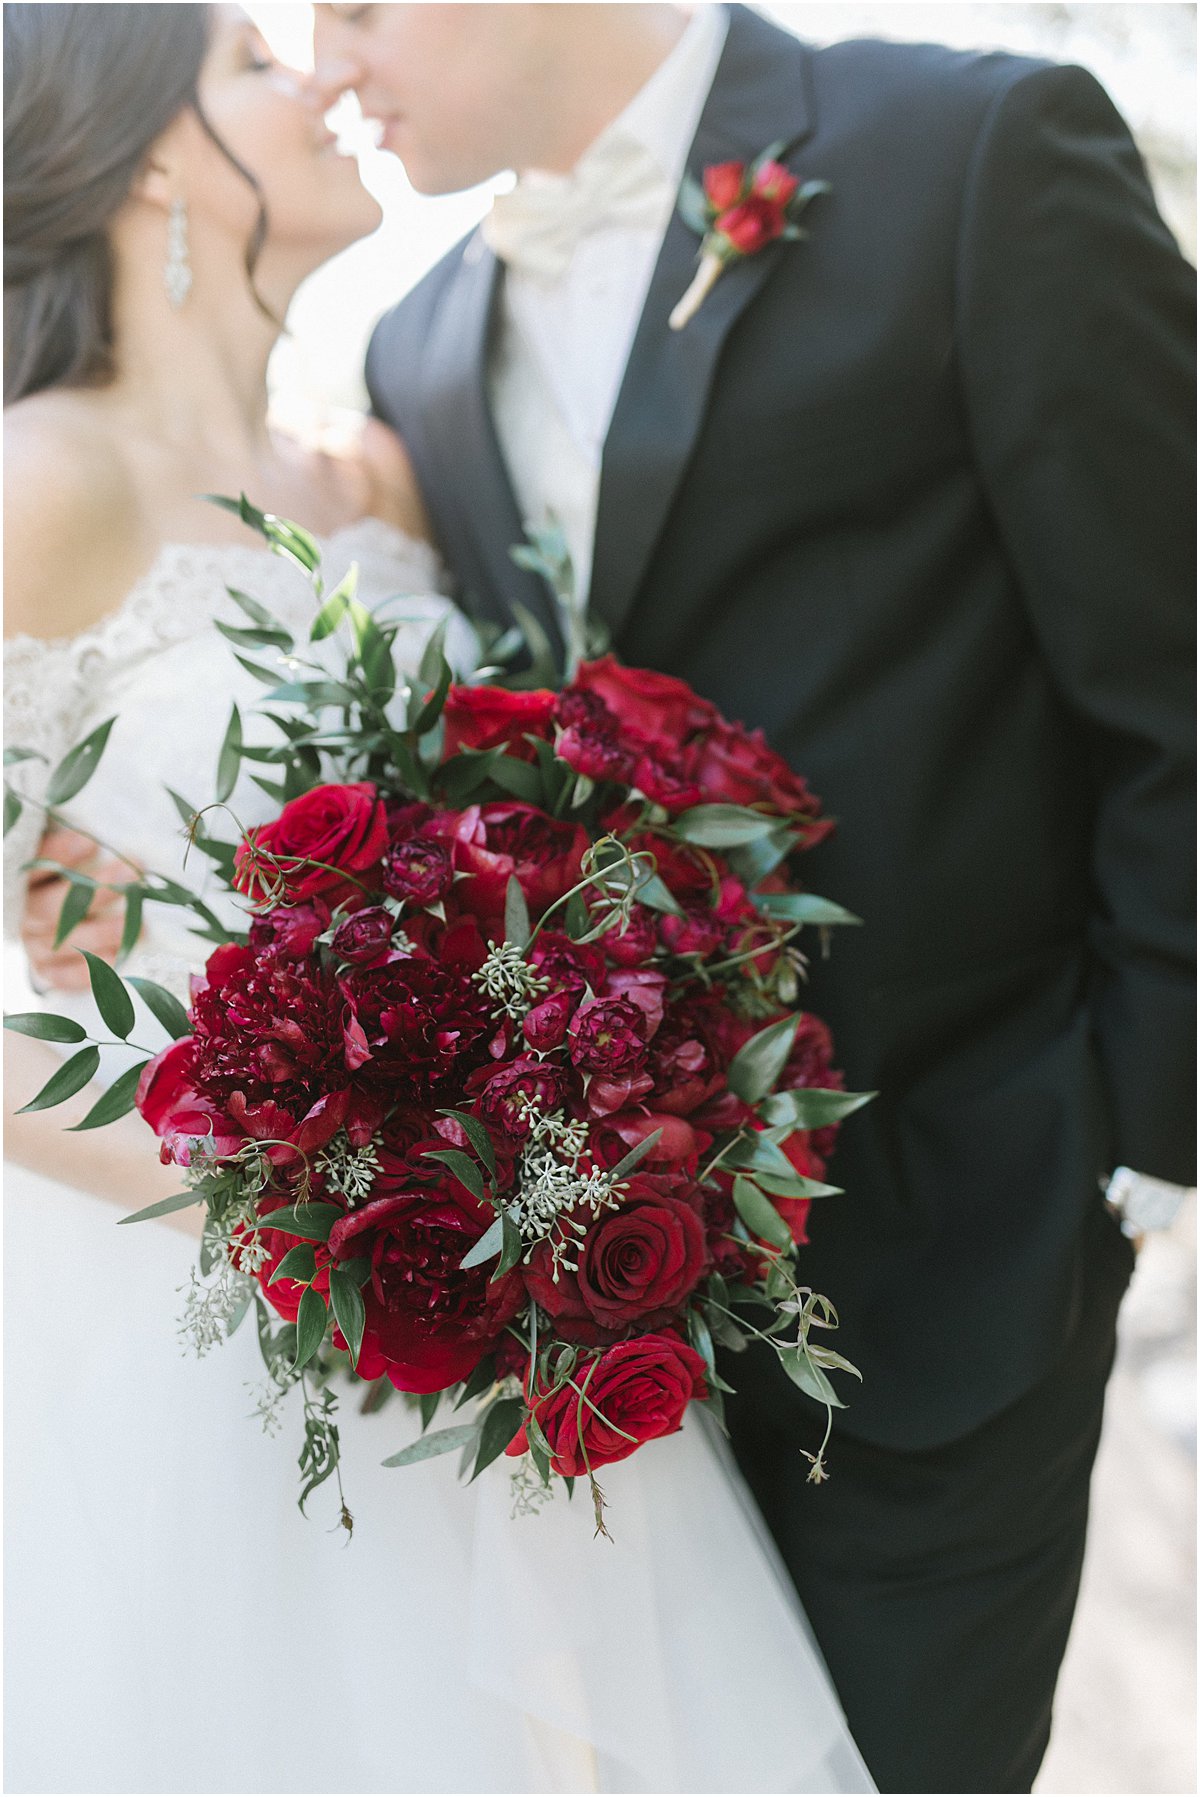 Christmas Wedding Ideas | Red Rose Bridal Bouquet | Palm Beach, FL | Married in Palm Beach | www.marriedinpalmbeach.com | Katina Patriquin Photography | Rackel Gehlsen Weddings and Events